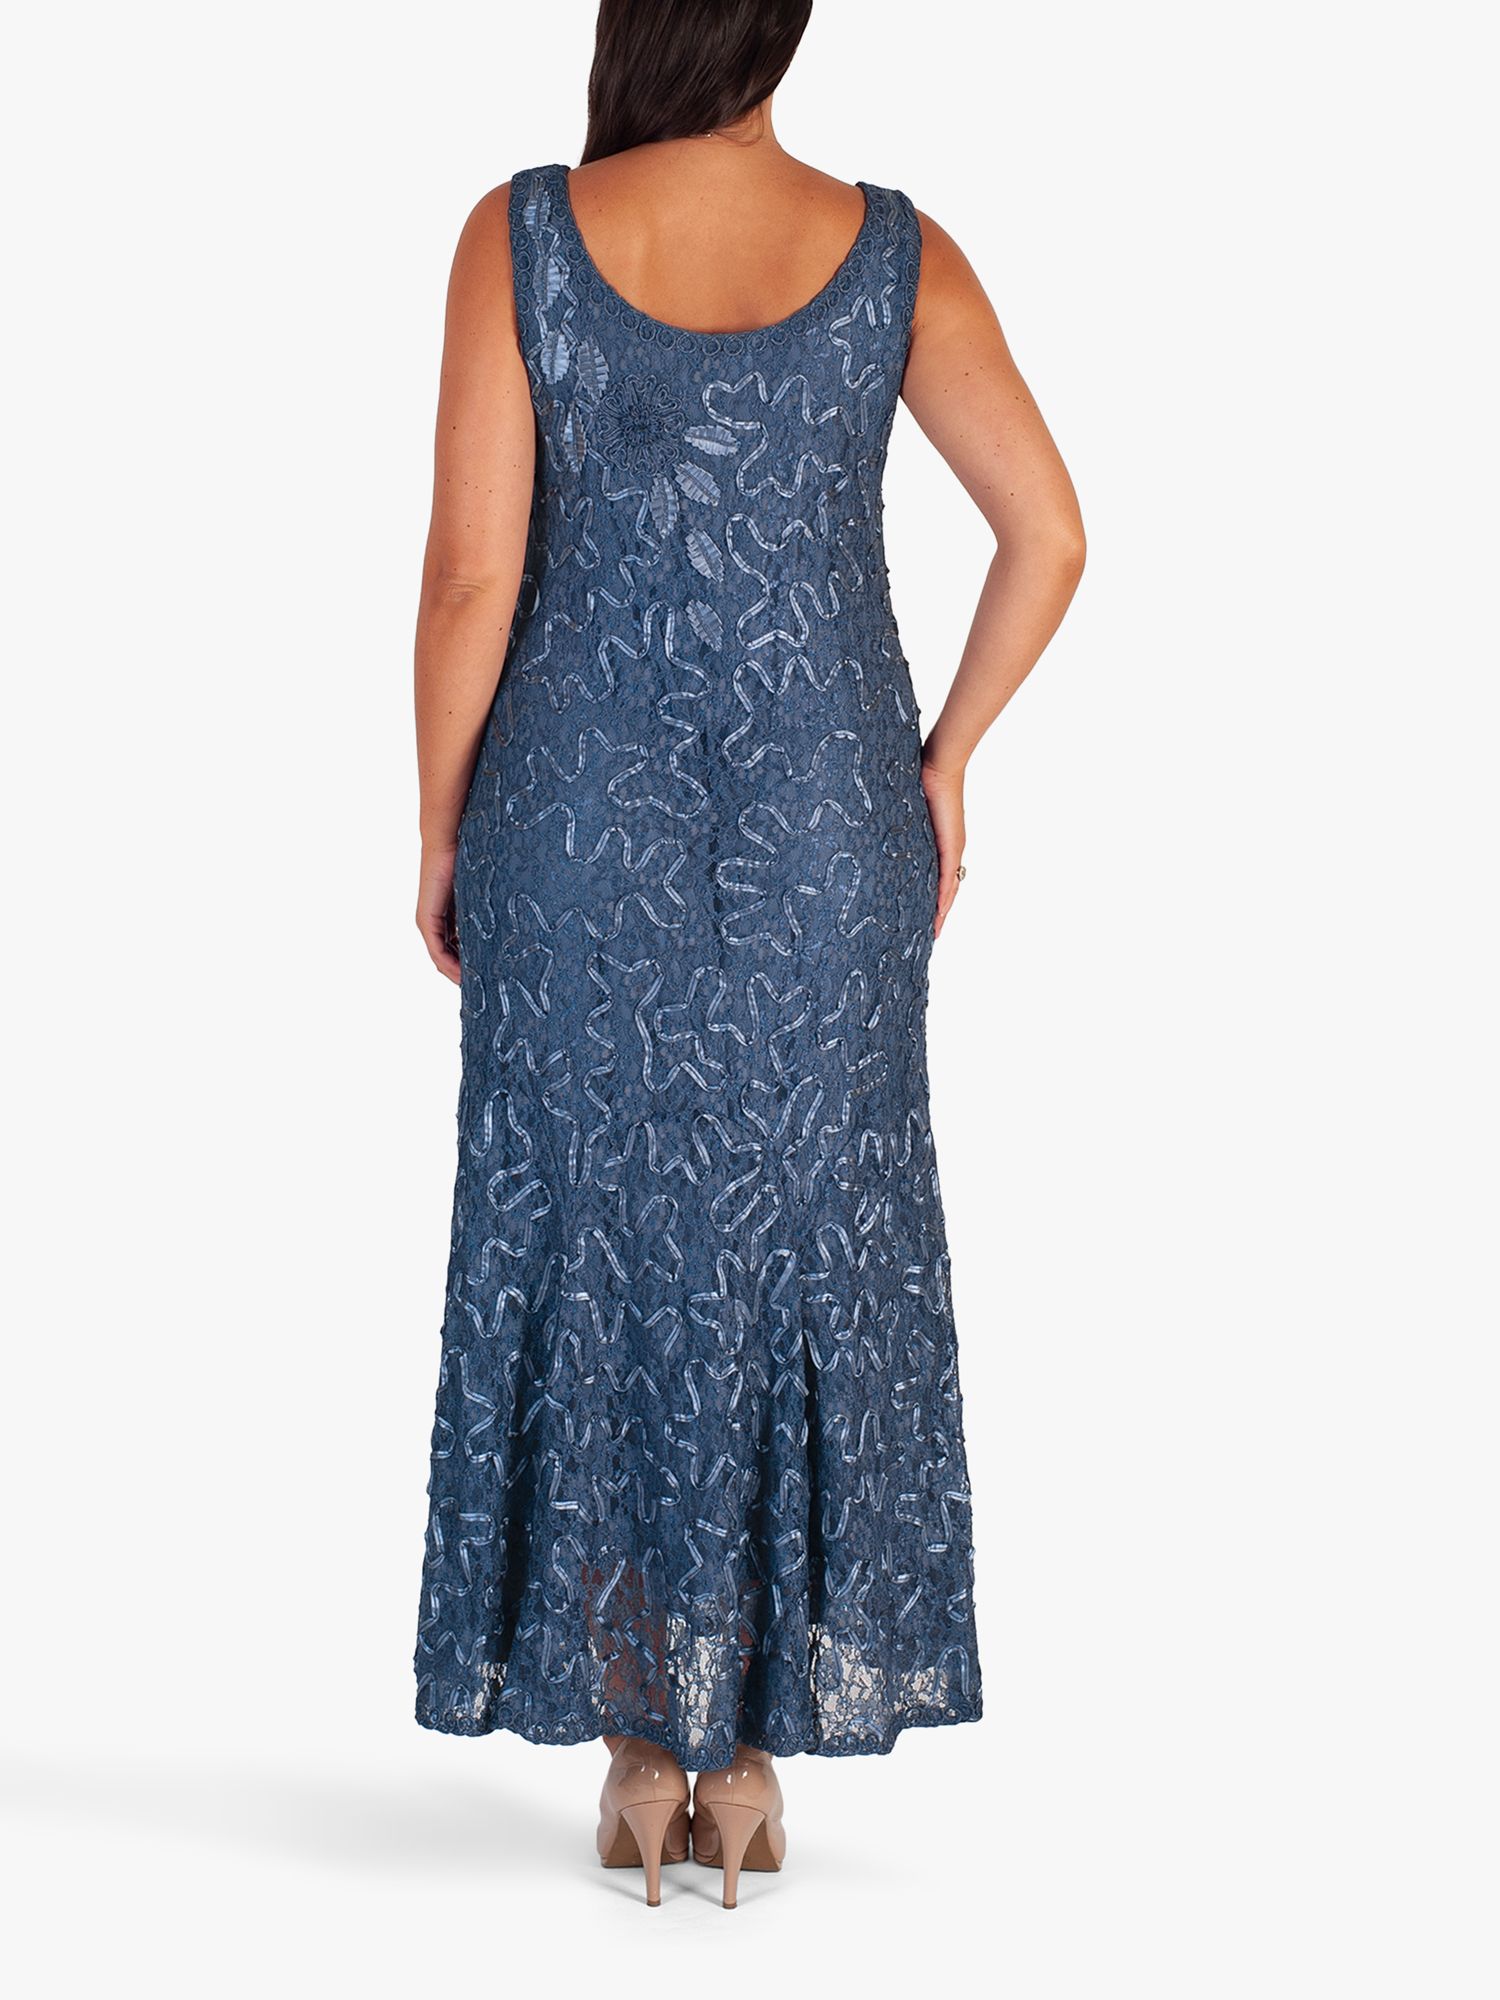 Chesca Lace Cornelli Dress, Bluebird at John Lewis & Partners